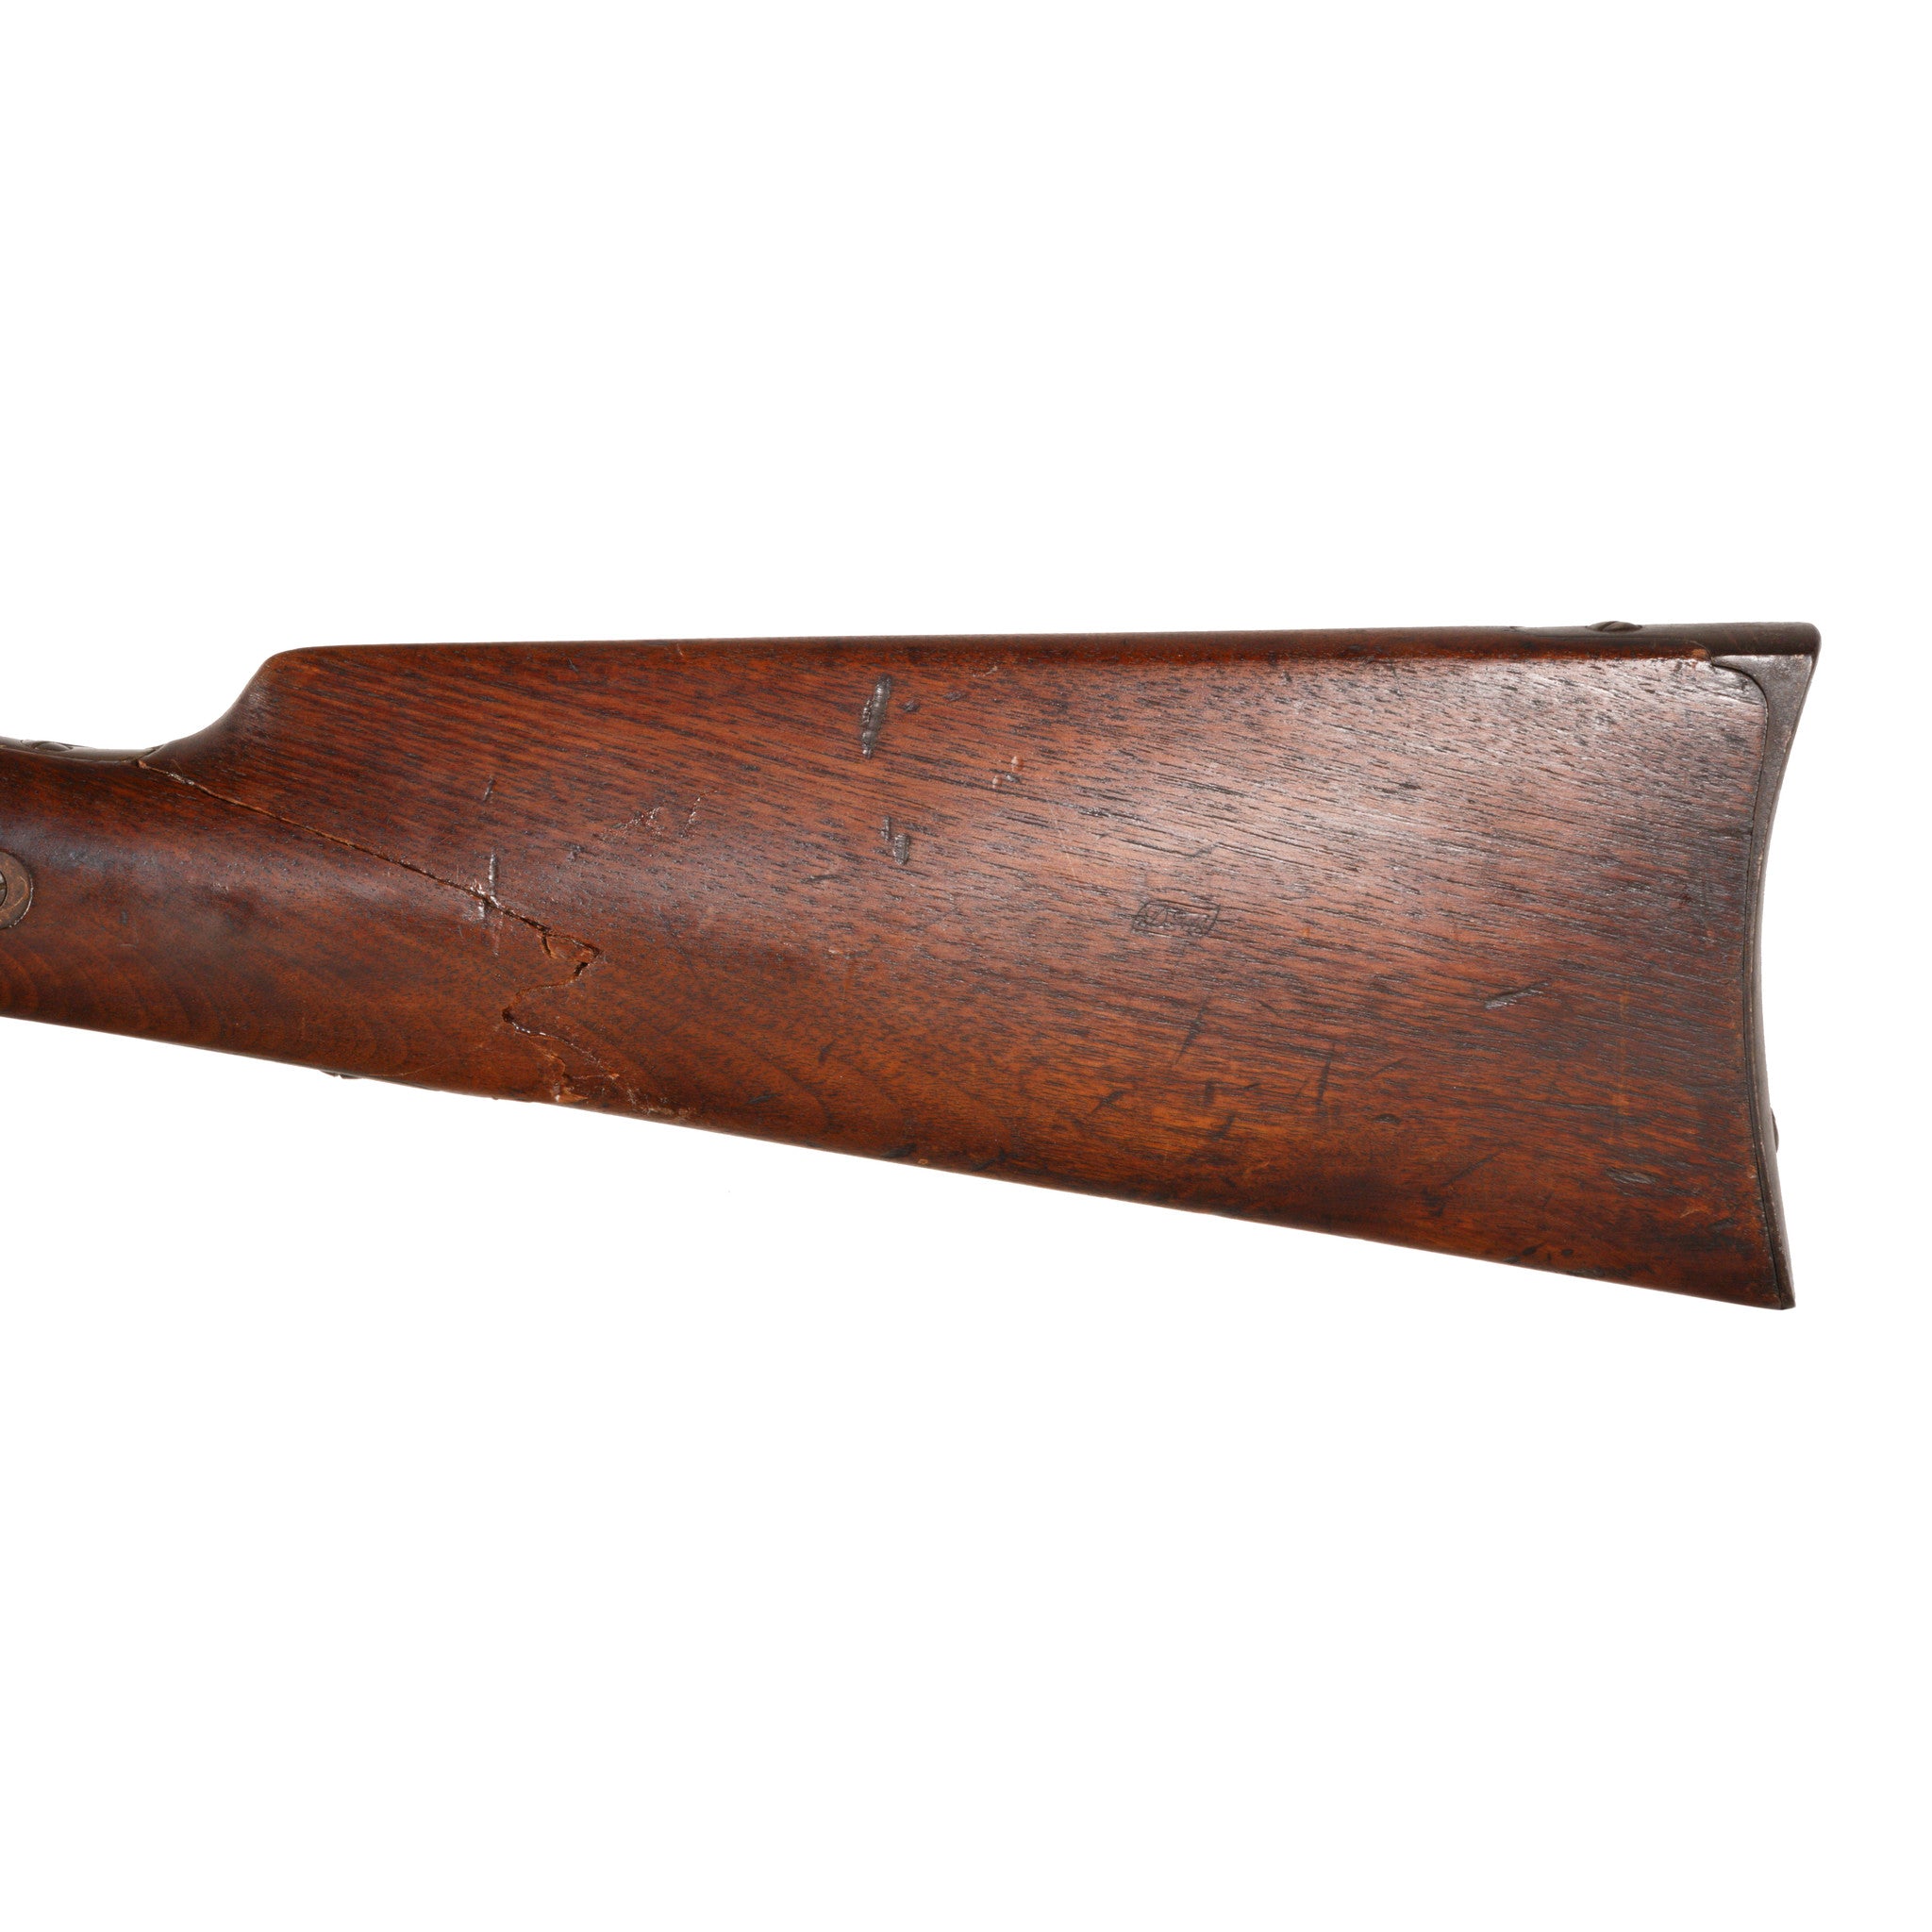 Model 1867 Sharps Carbine